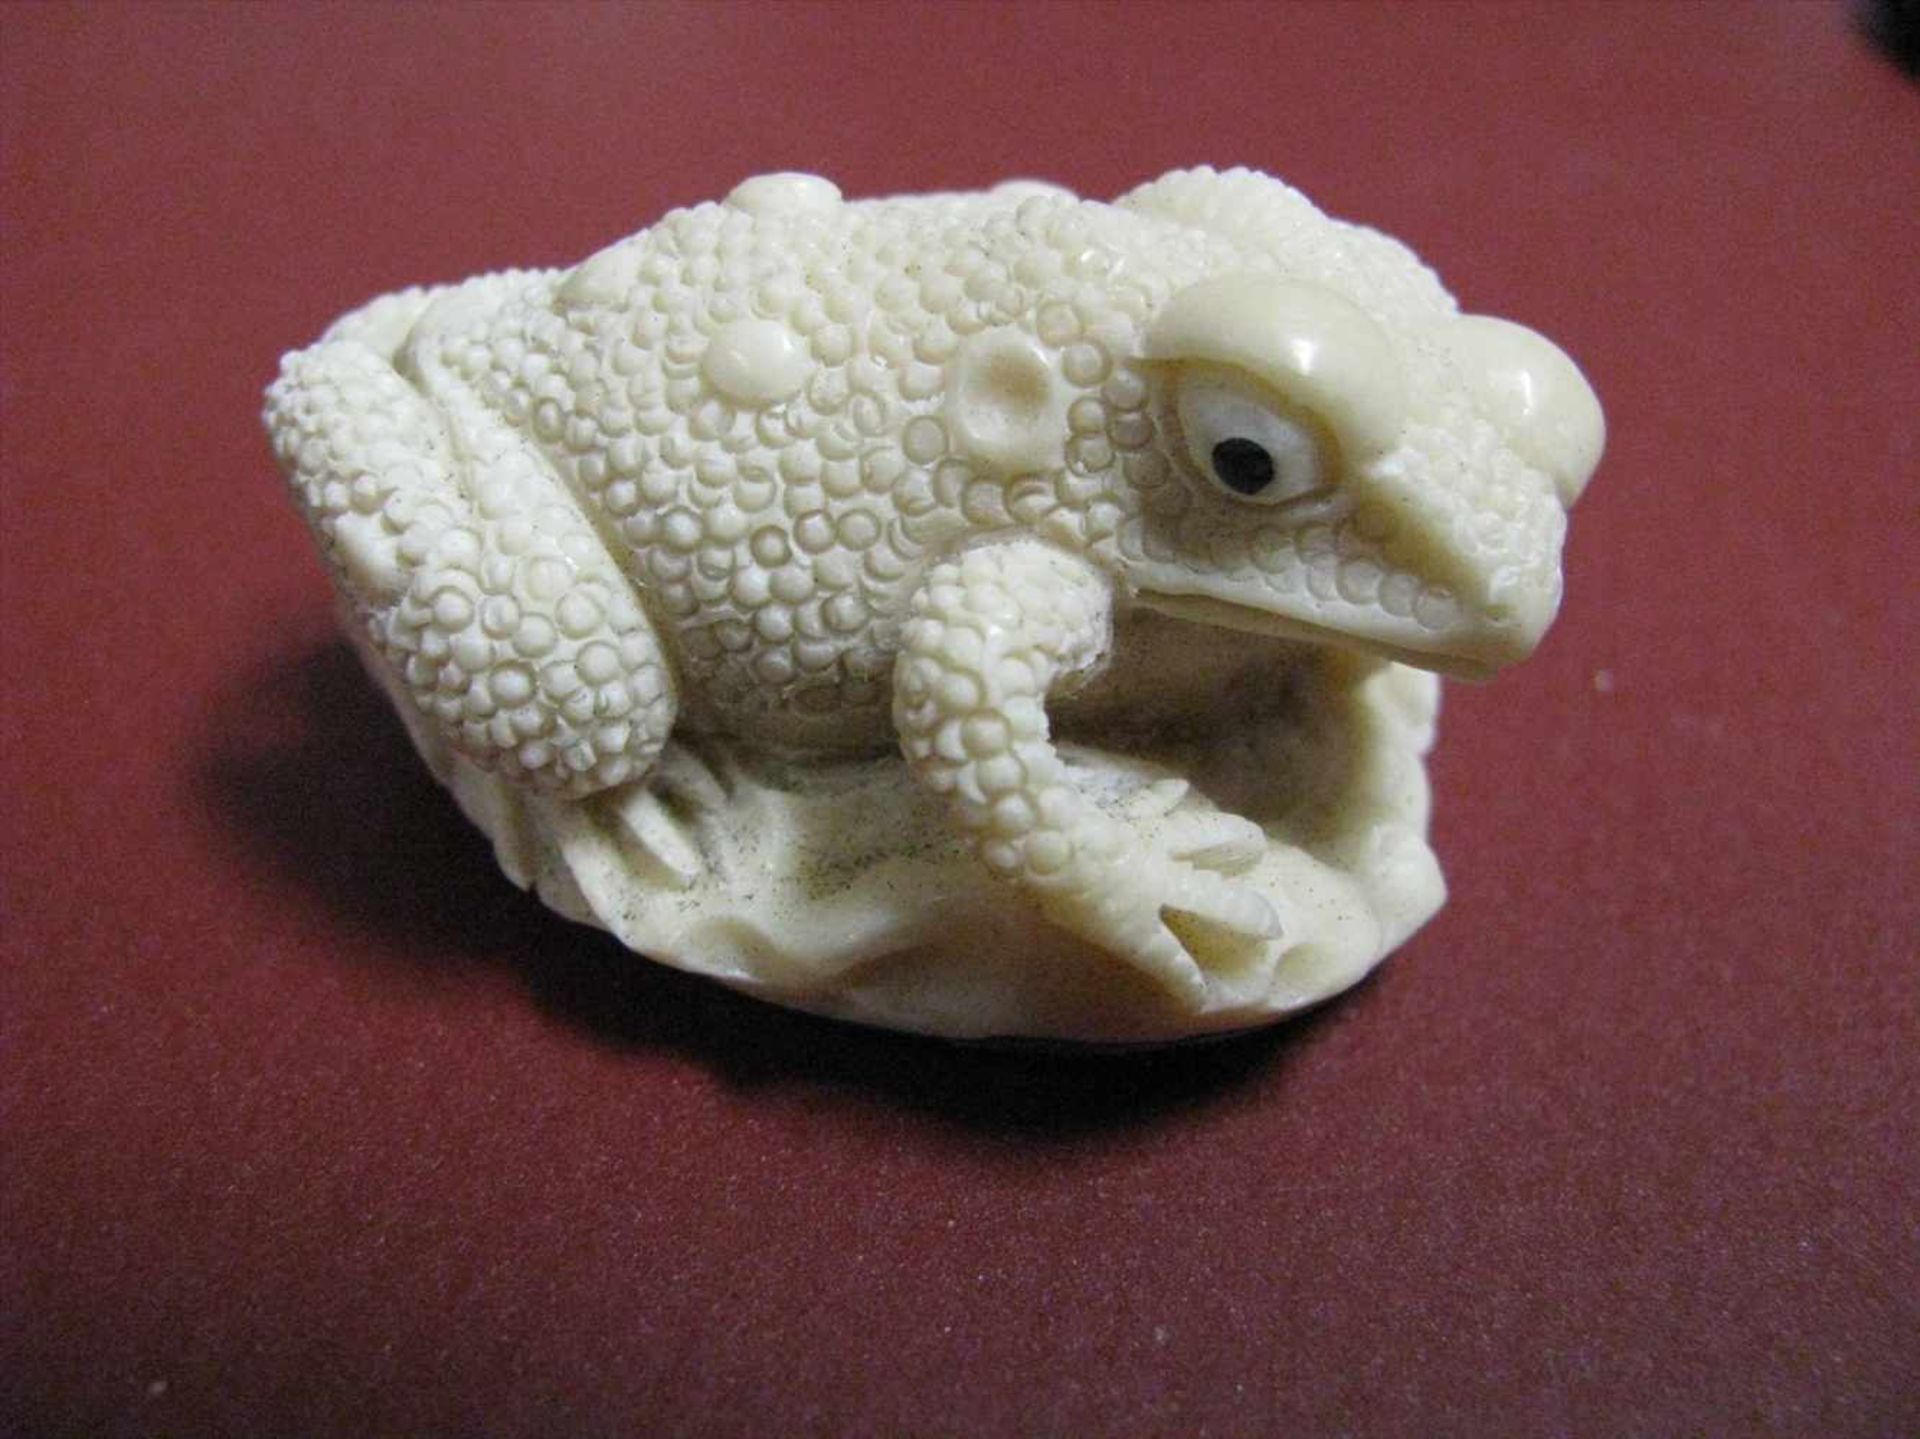 Frosch, wohl Südamerika, Taguanuss/Steinnuss beschnitzt, 2 x 4,5 x 3 cm.